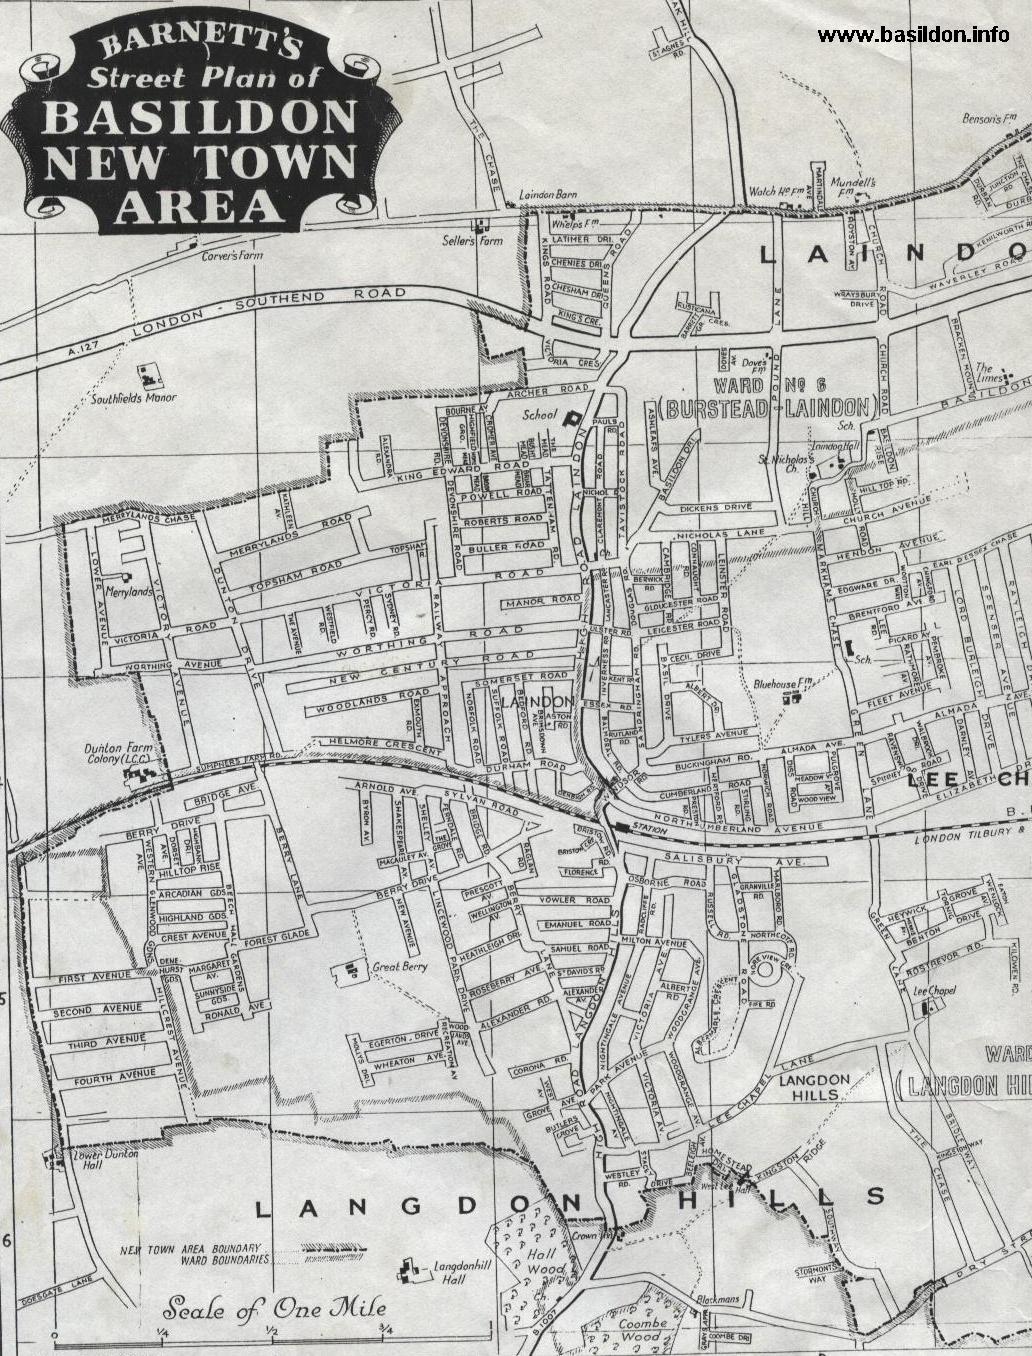 New Town Street Plan Of Basildon - Laindon/Langdon Hills Circa 1951